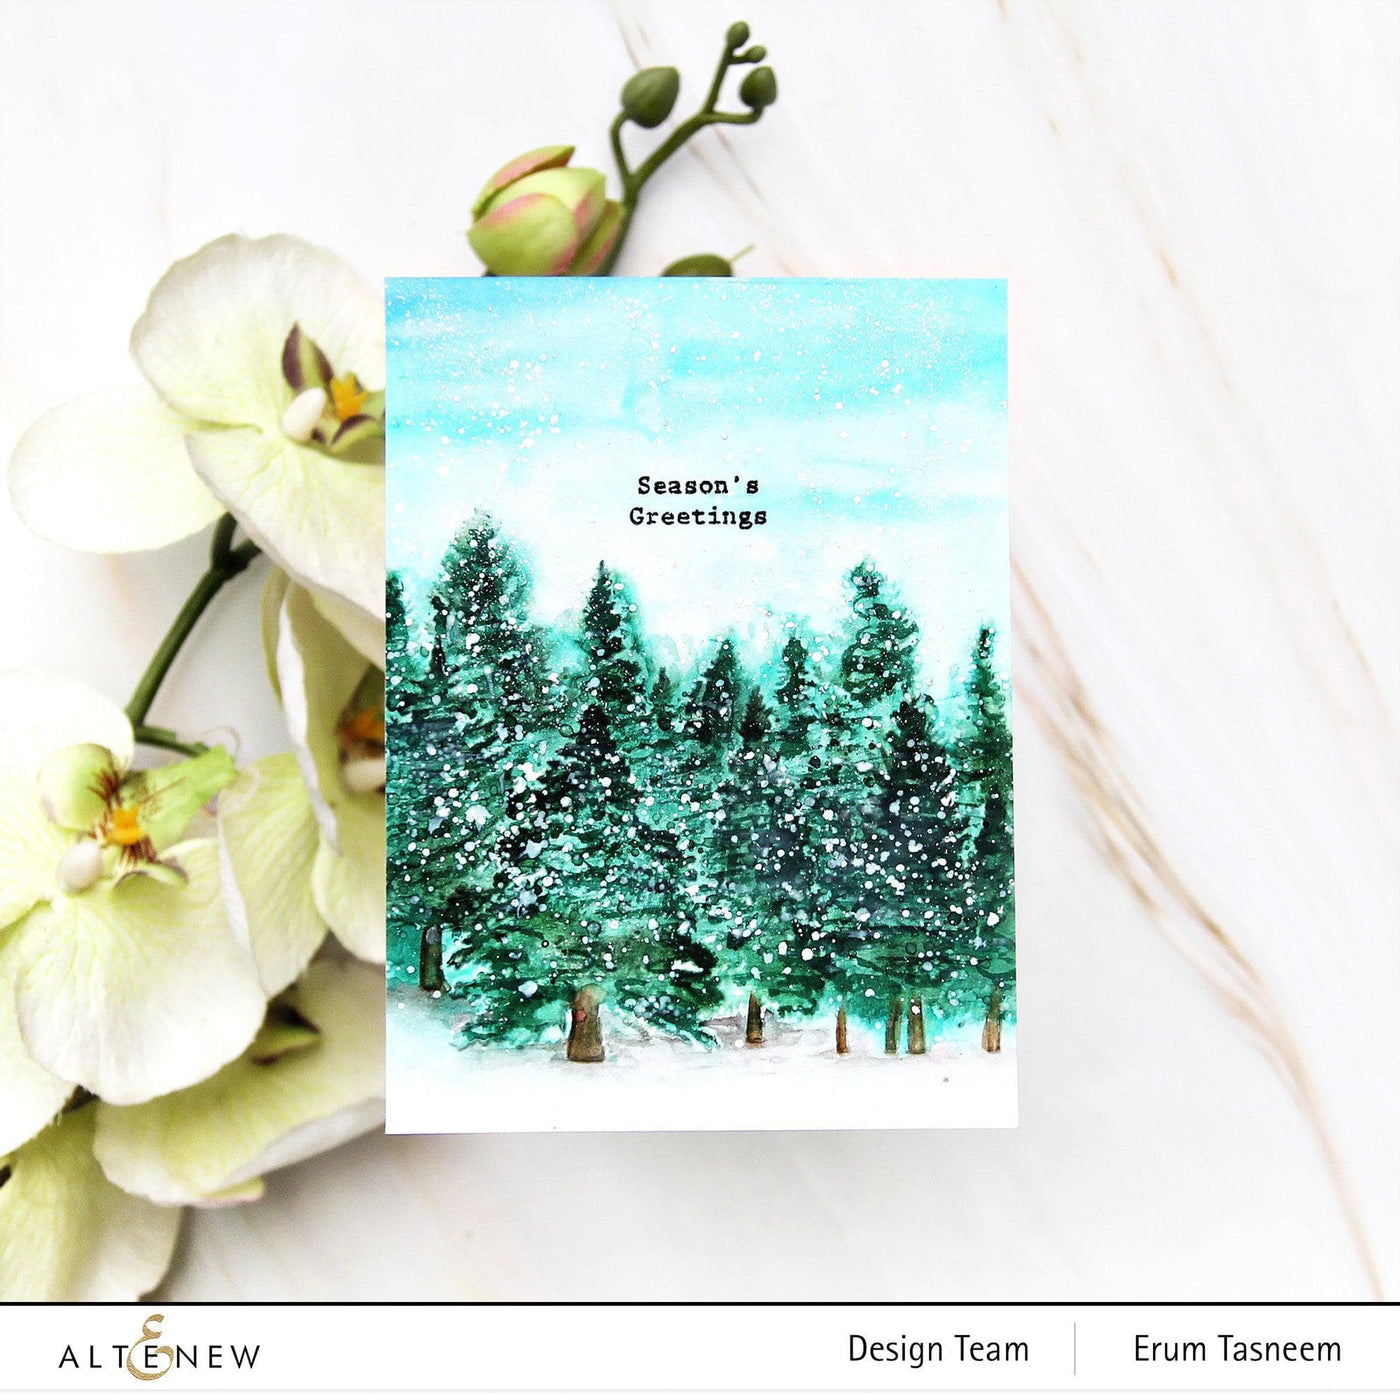 Forest / Pine Trees - Stencil – My Custom Stencils